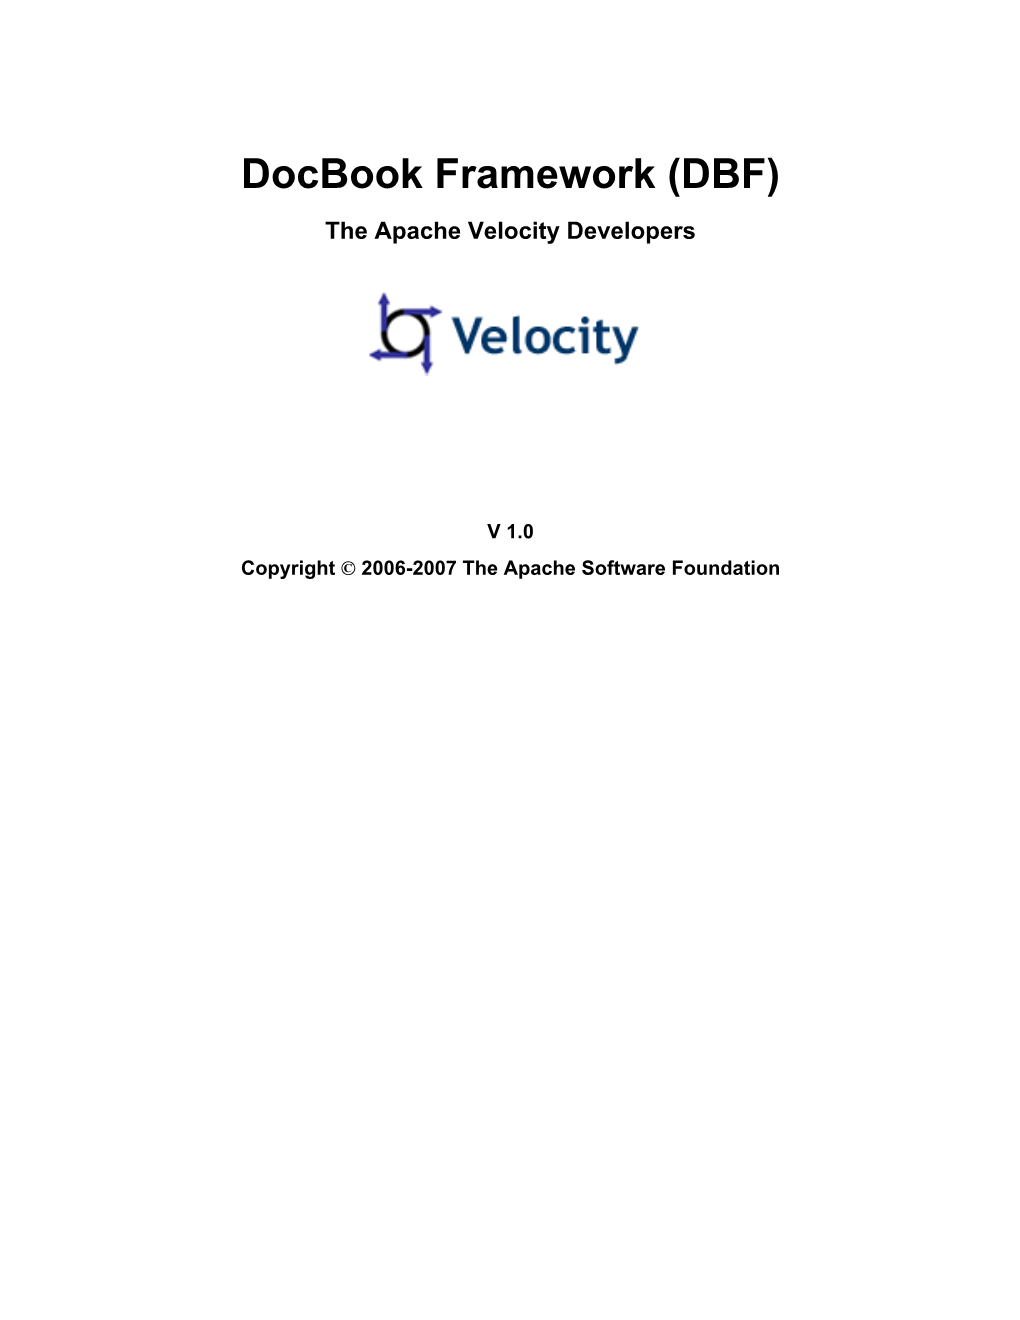 Docbook Framework (DBF) the Apache Velocity Developers